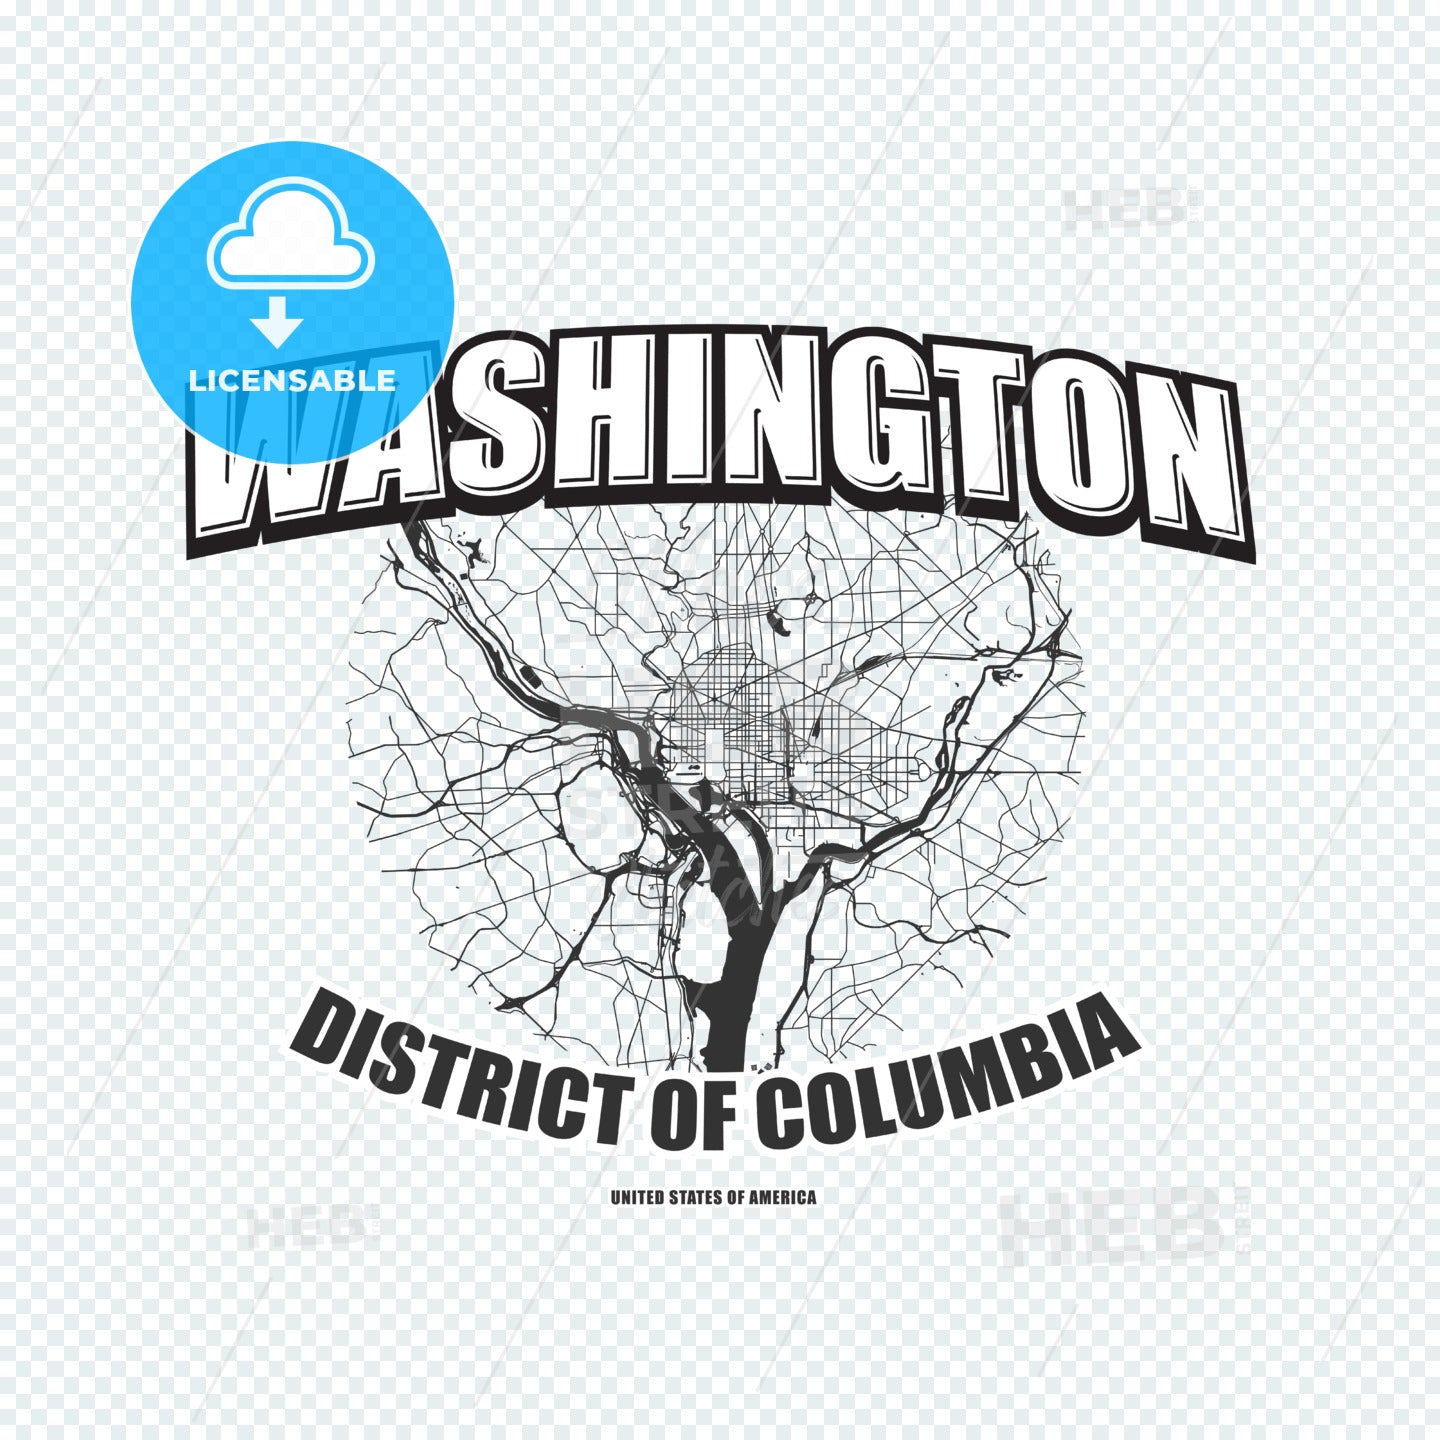 Washington, District of Columbia, logo artwork – instant download